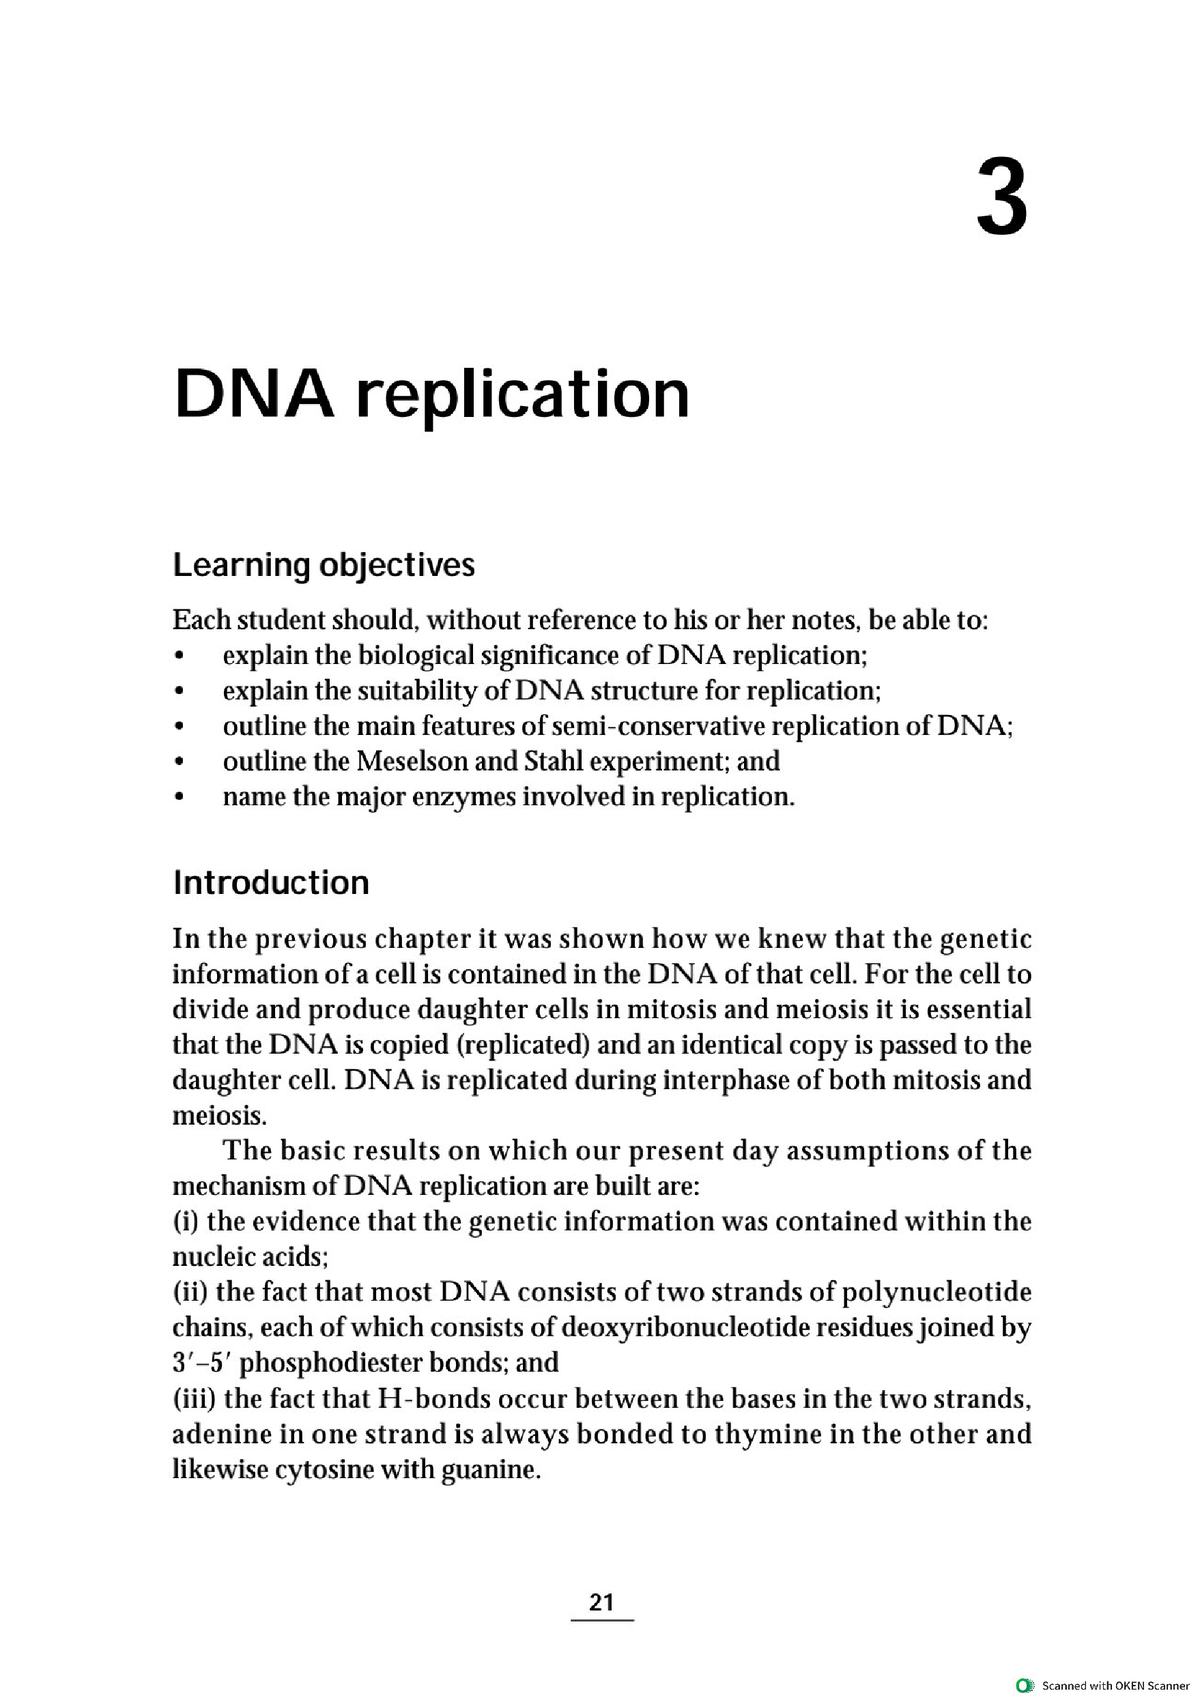 dna replication sample essay